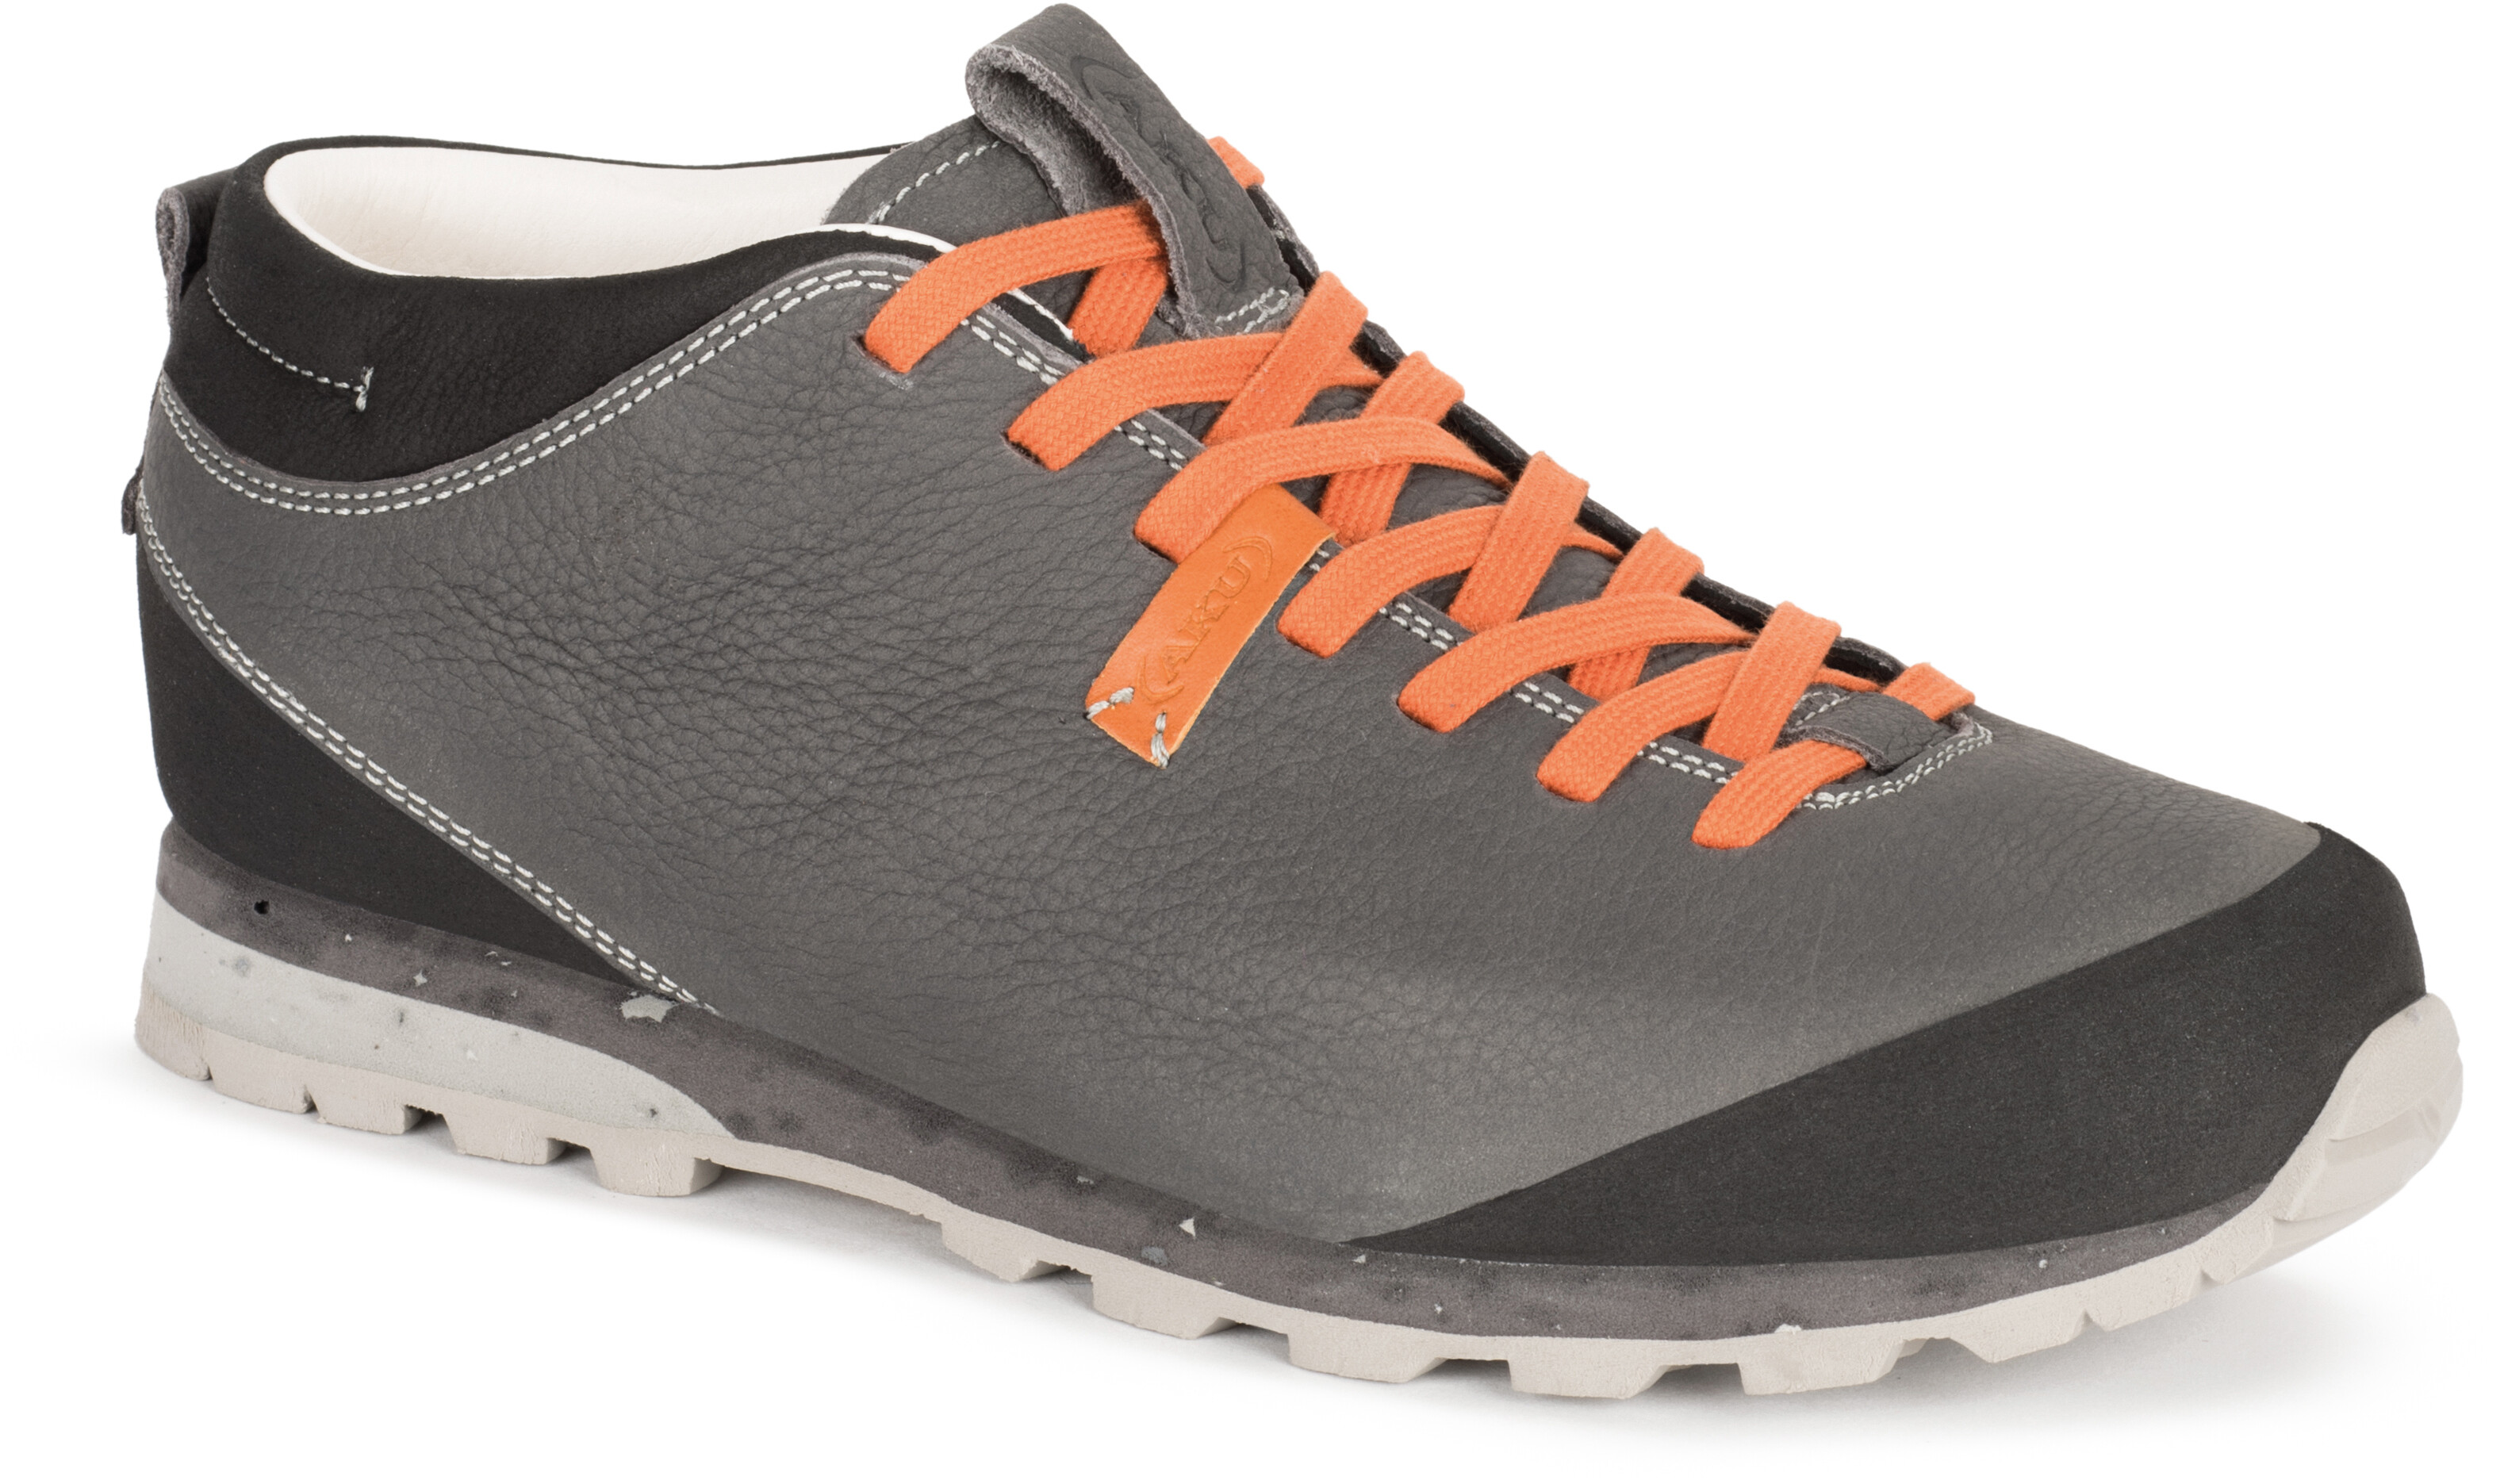 AKU Bellamont II Plus Schuhe grey | campz.ch